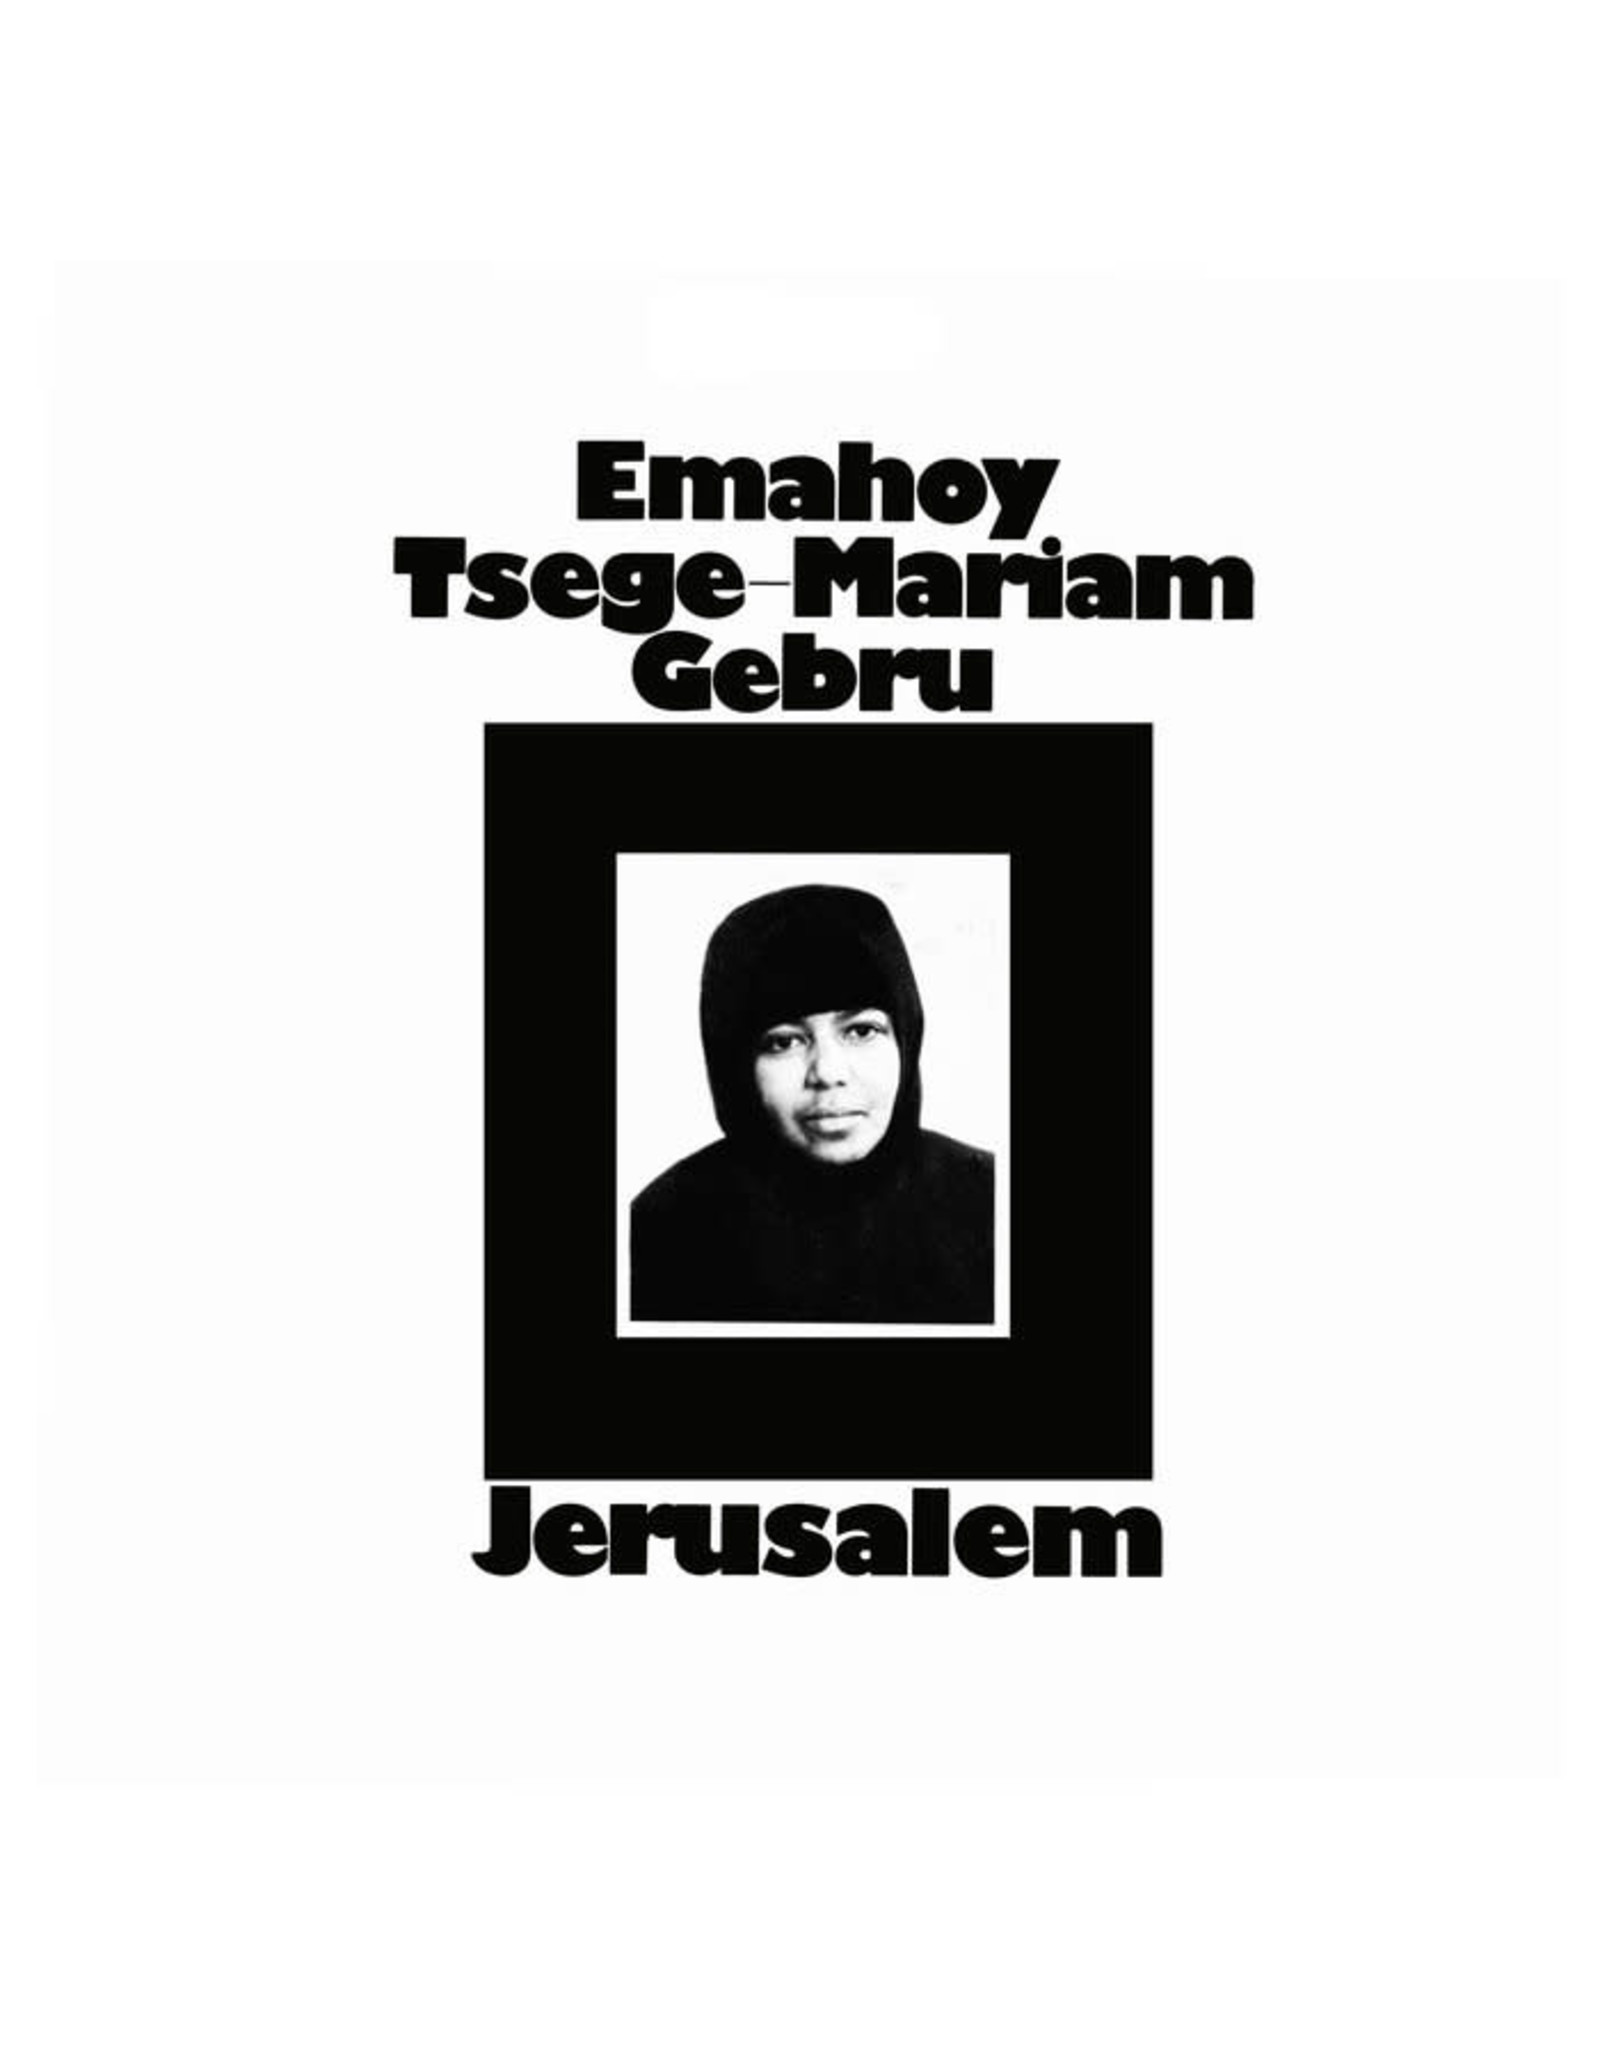 Mississippi Gebru, Emahoy Tsege Mariam: Jerusalem LP